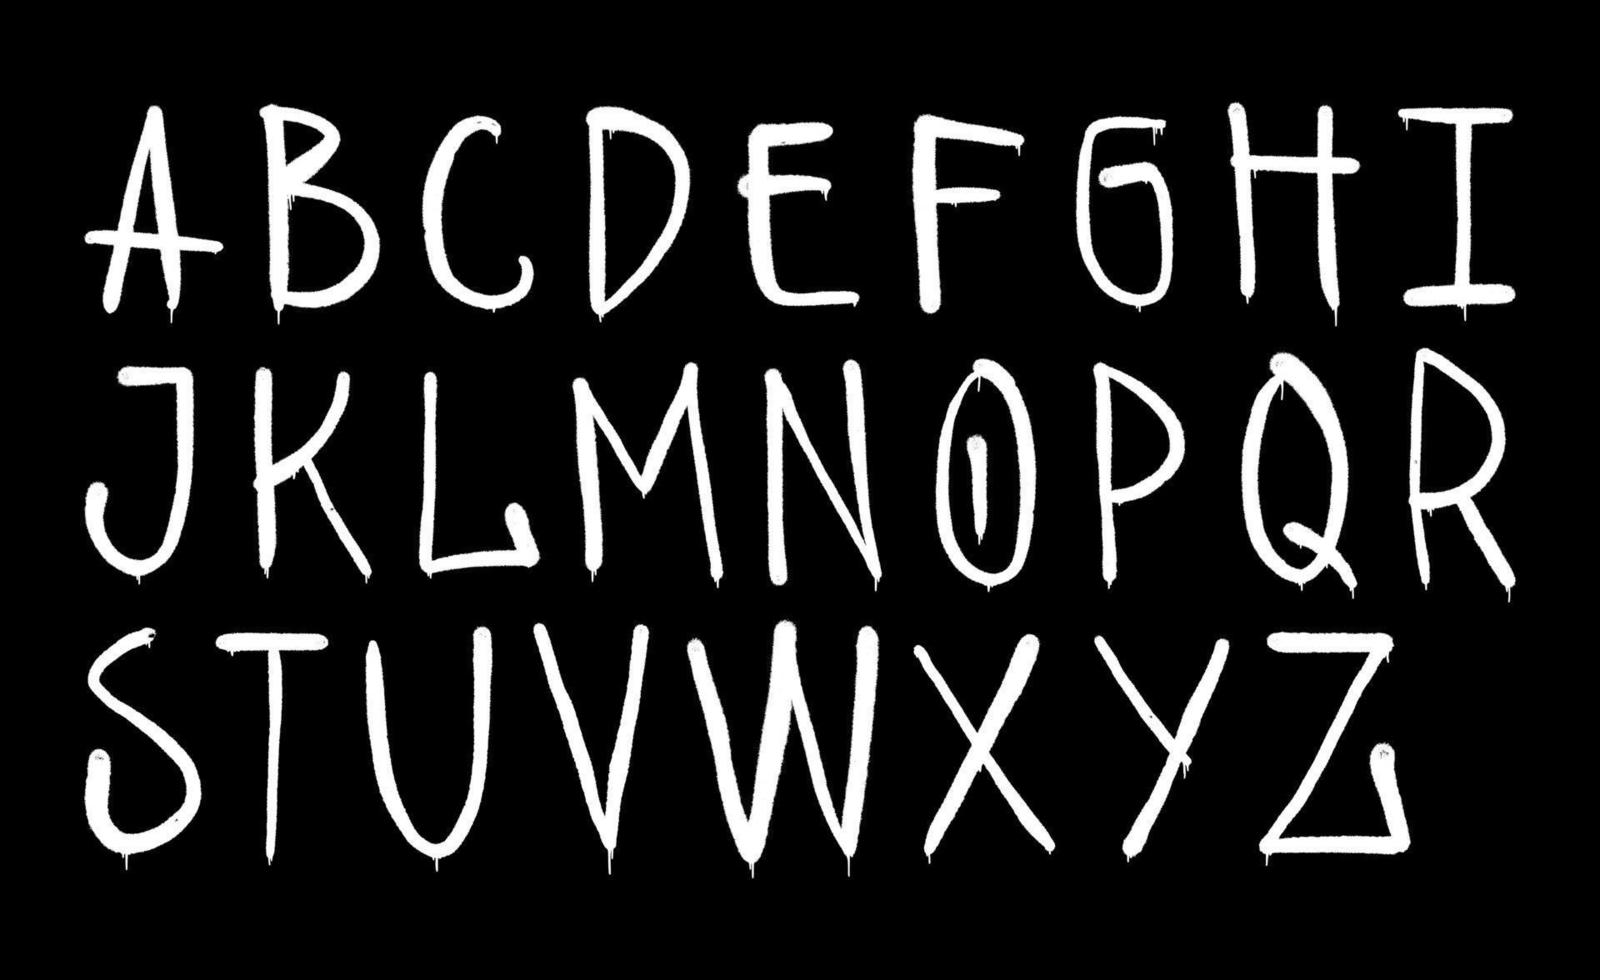 graffiti alfabet. spray måla effekt brev vektor